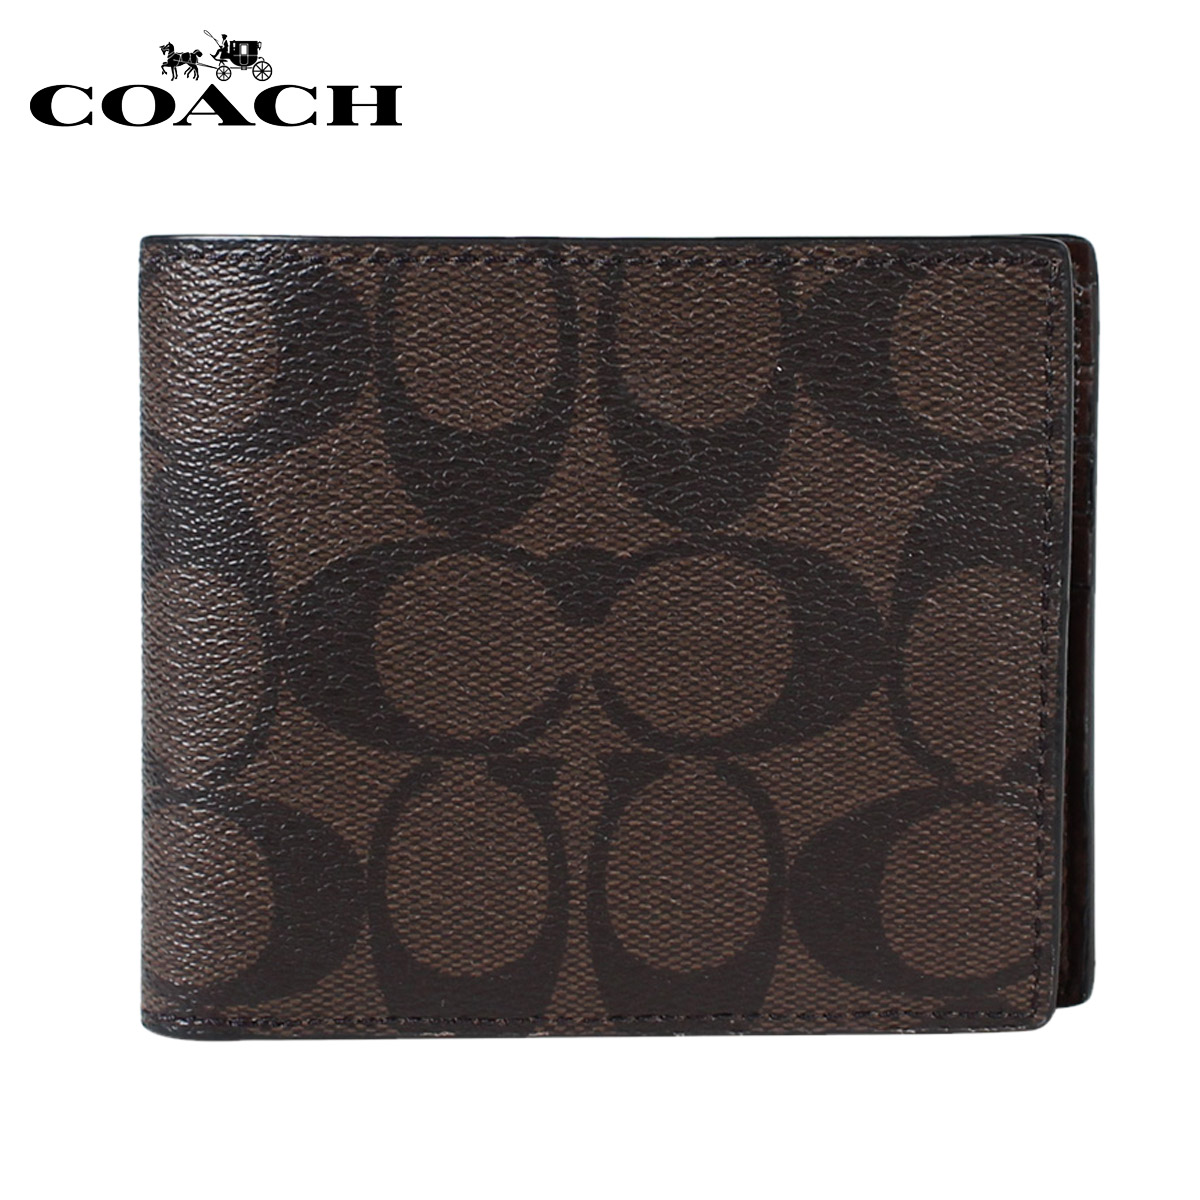 ALLSPORTS: COACH coach mens wallet two bi-fold Wallet case F74993 mahogany x Brown | Rakuten ...